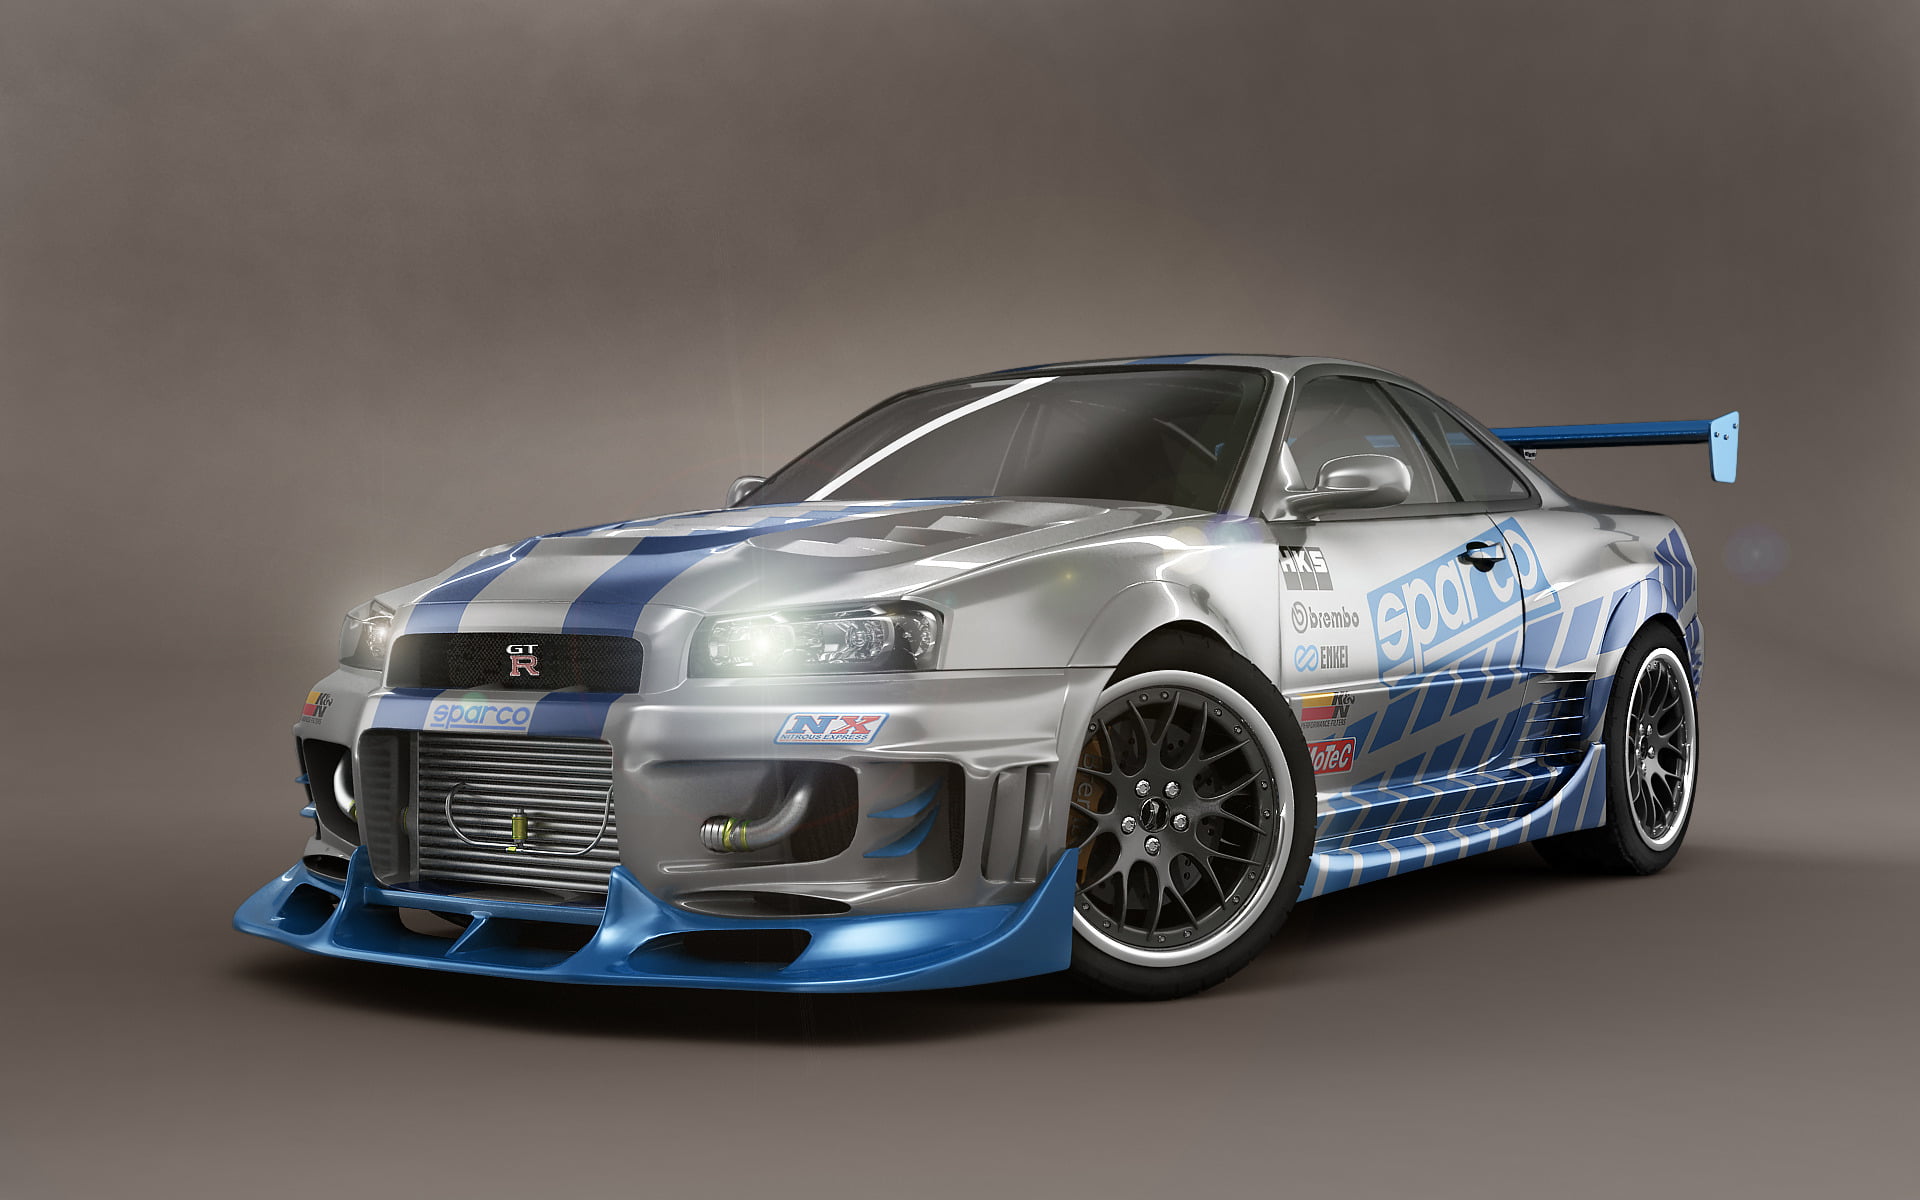 silver and blue Nissan Skyline GT-R R34, Shoot, Studio, car, sport